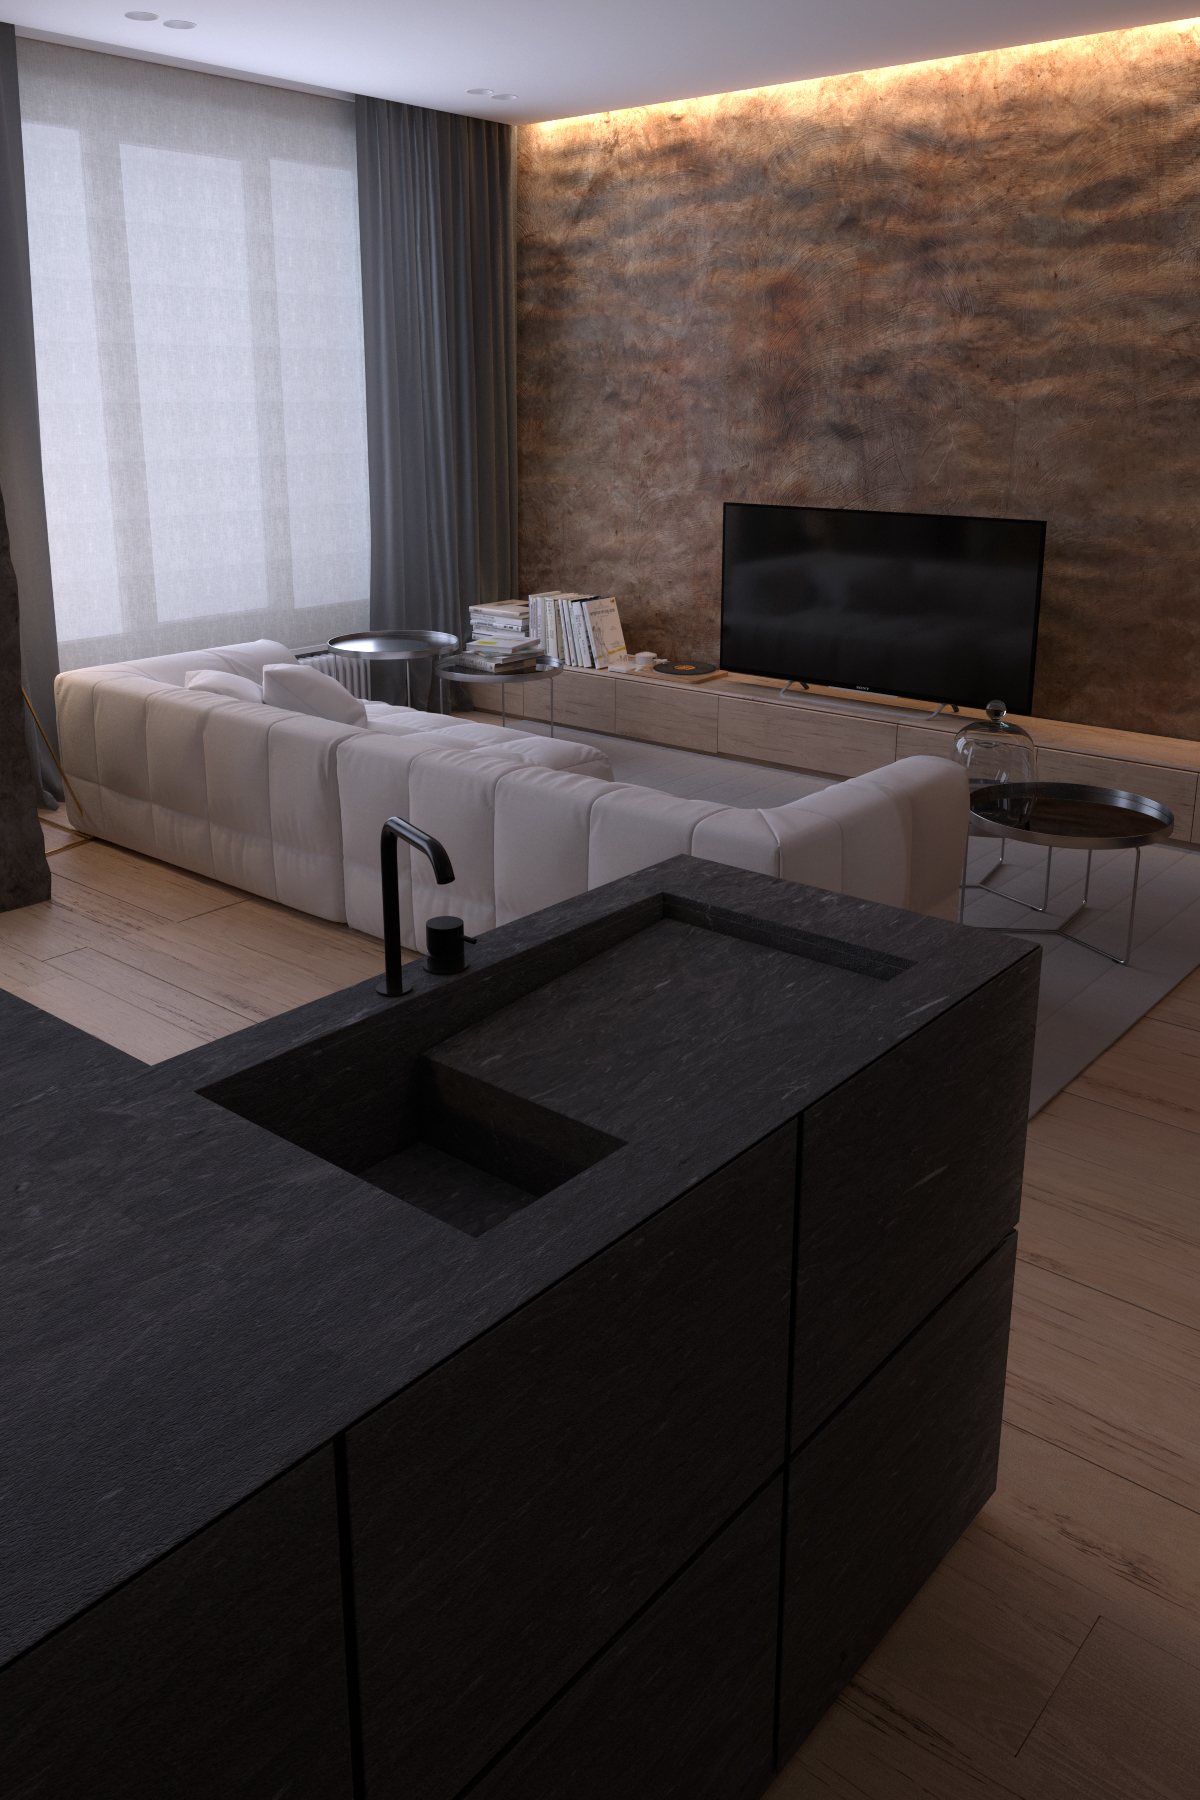 Luxury apartment design with dark interior style